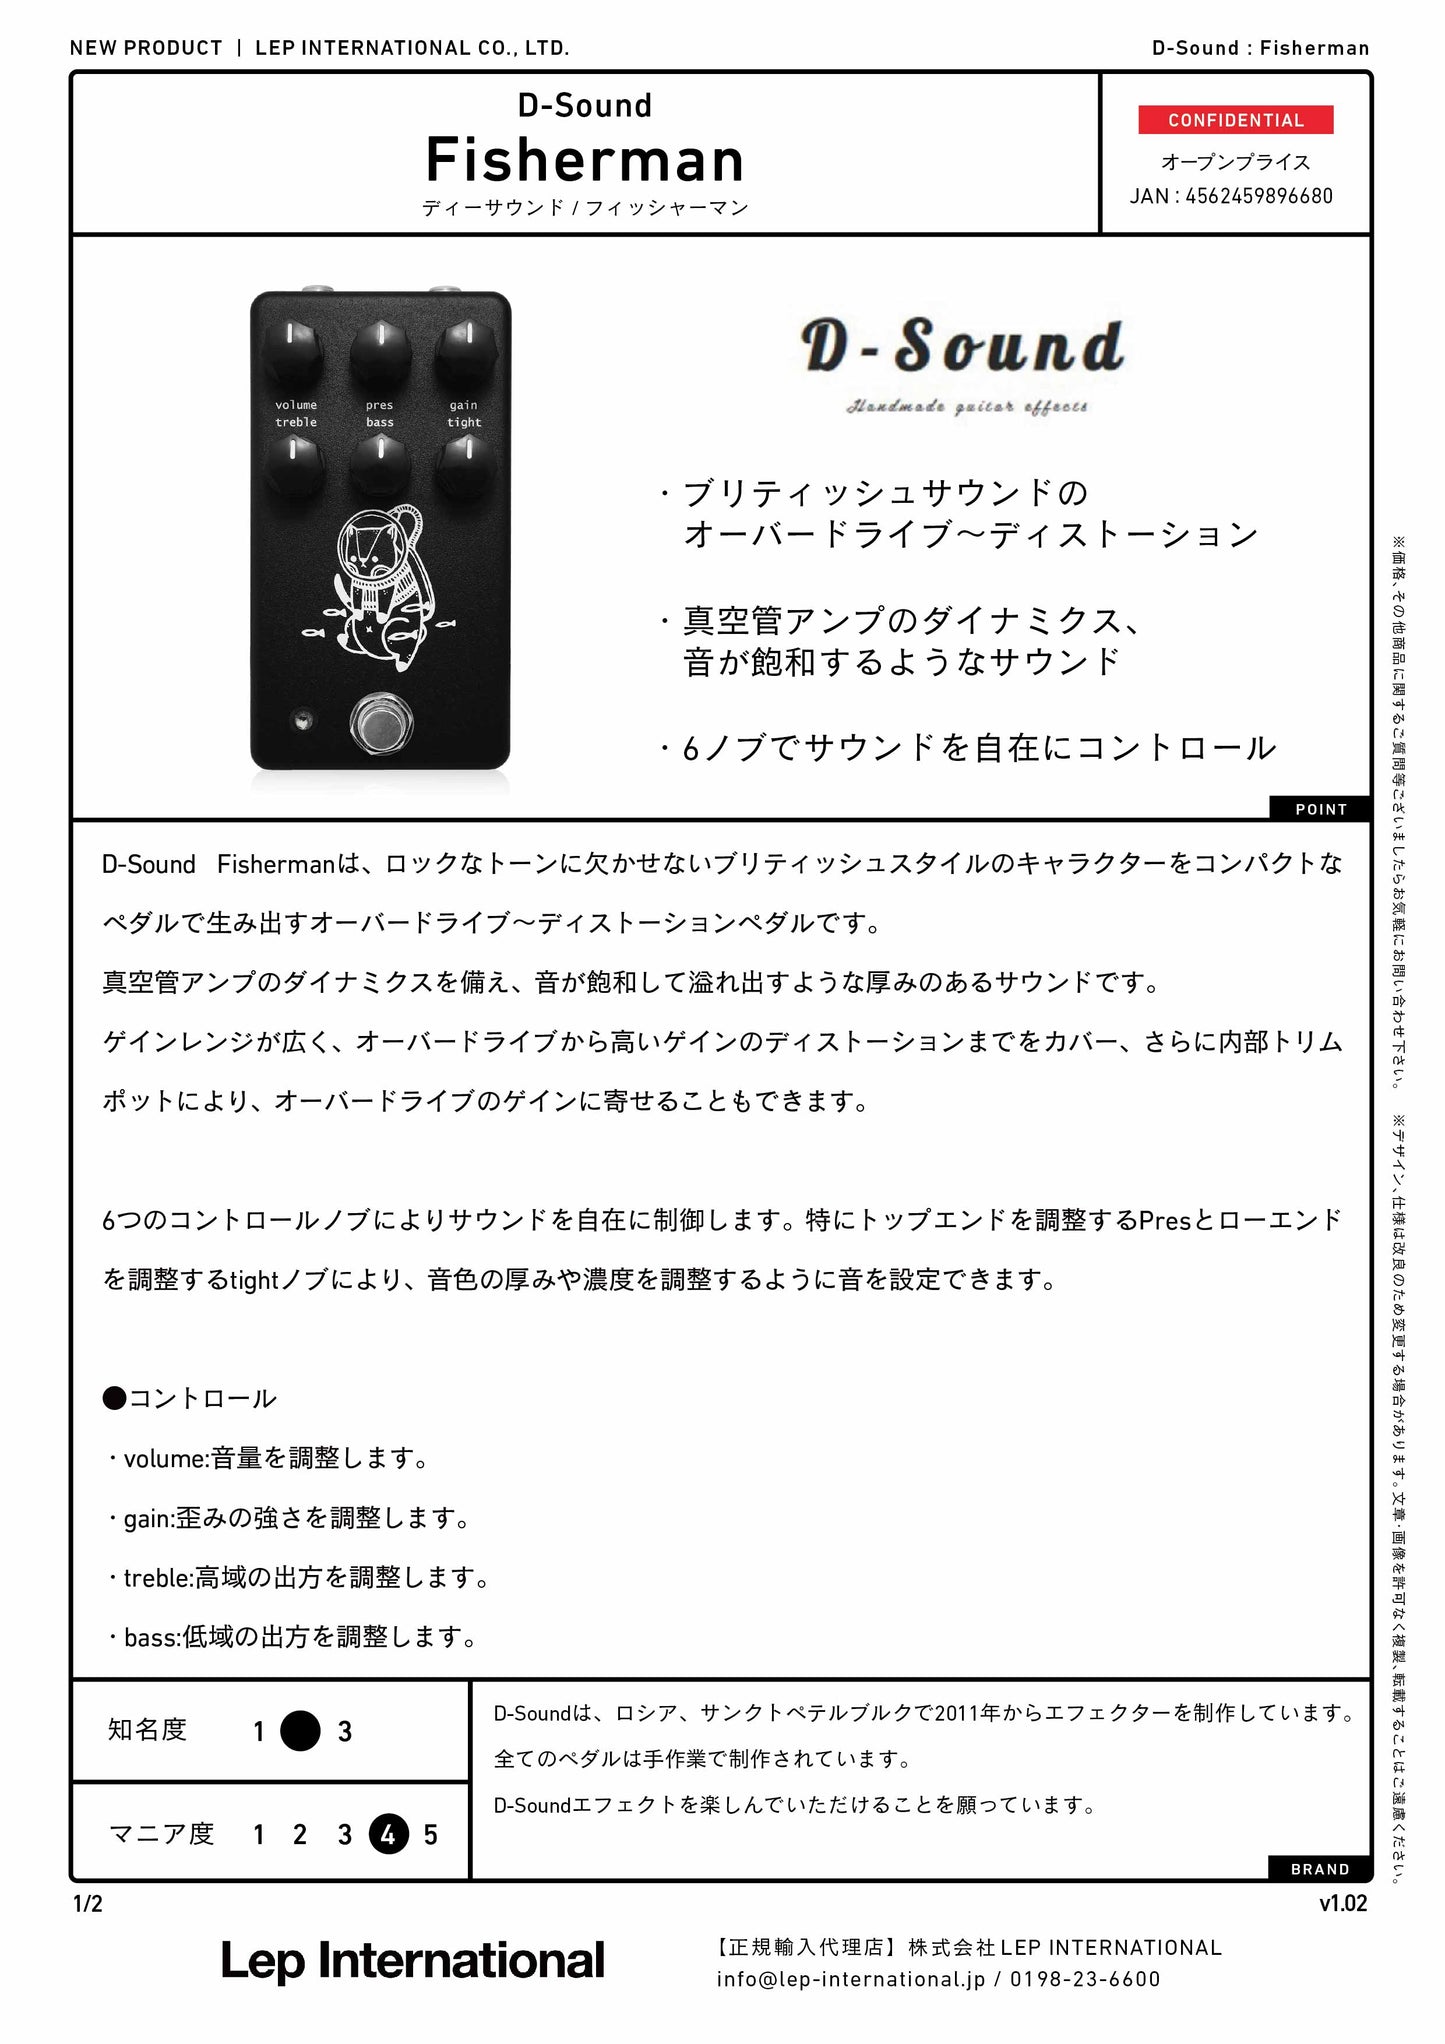 D-Sound/Fisherman